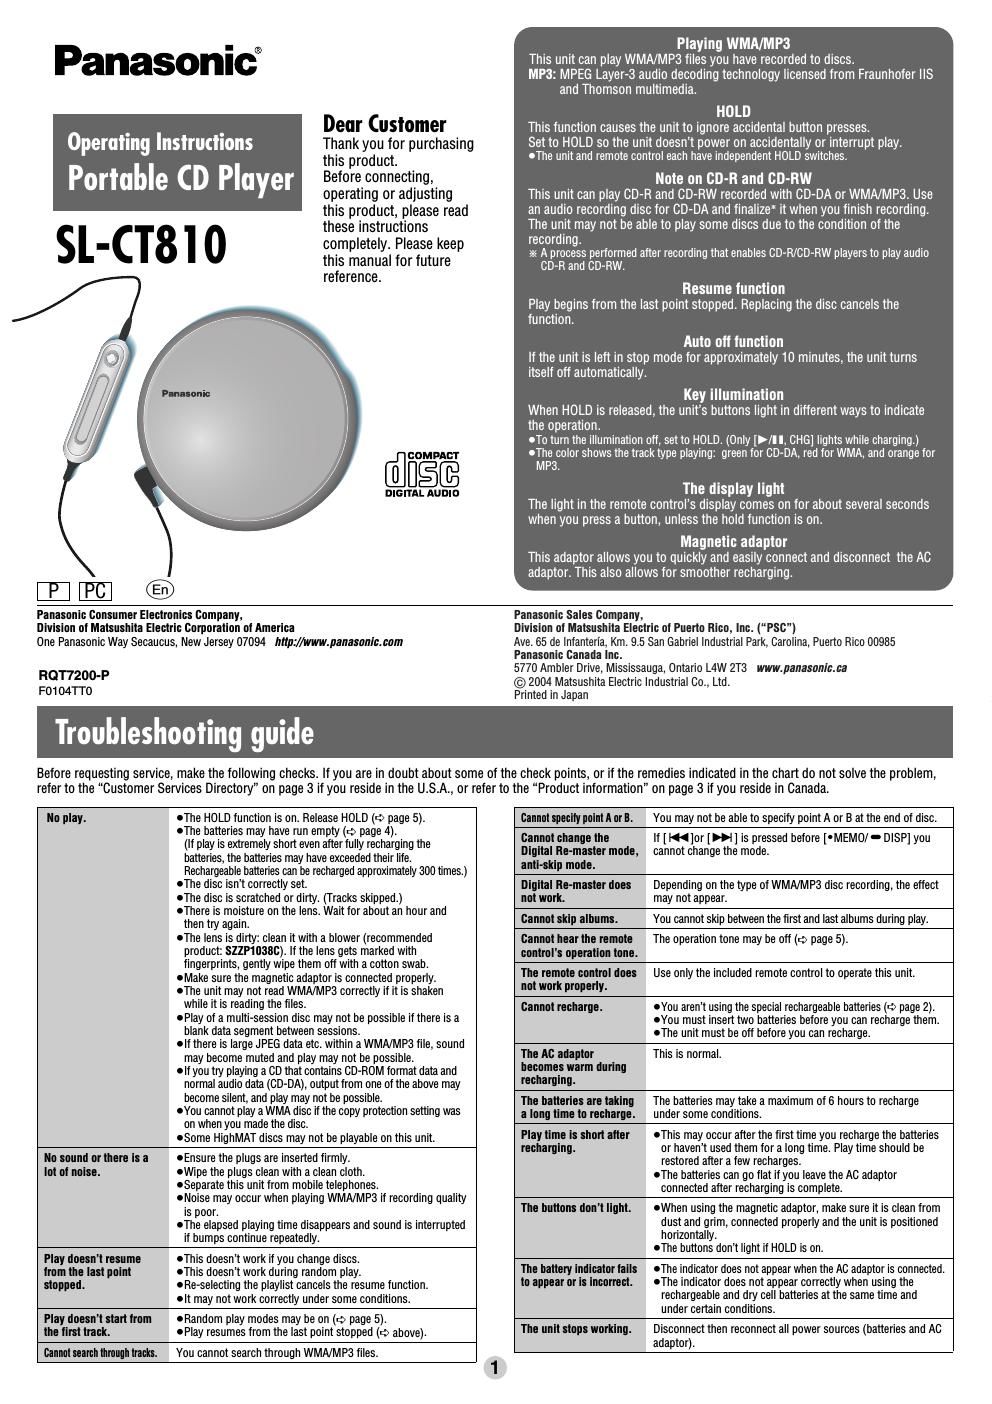 panasonic sl ct 810 owners manual